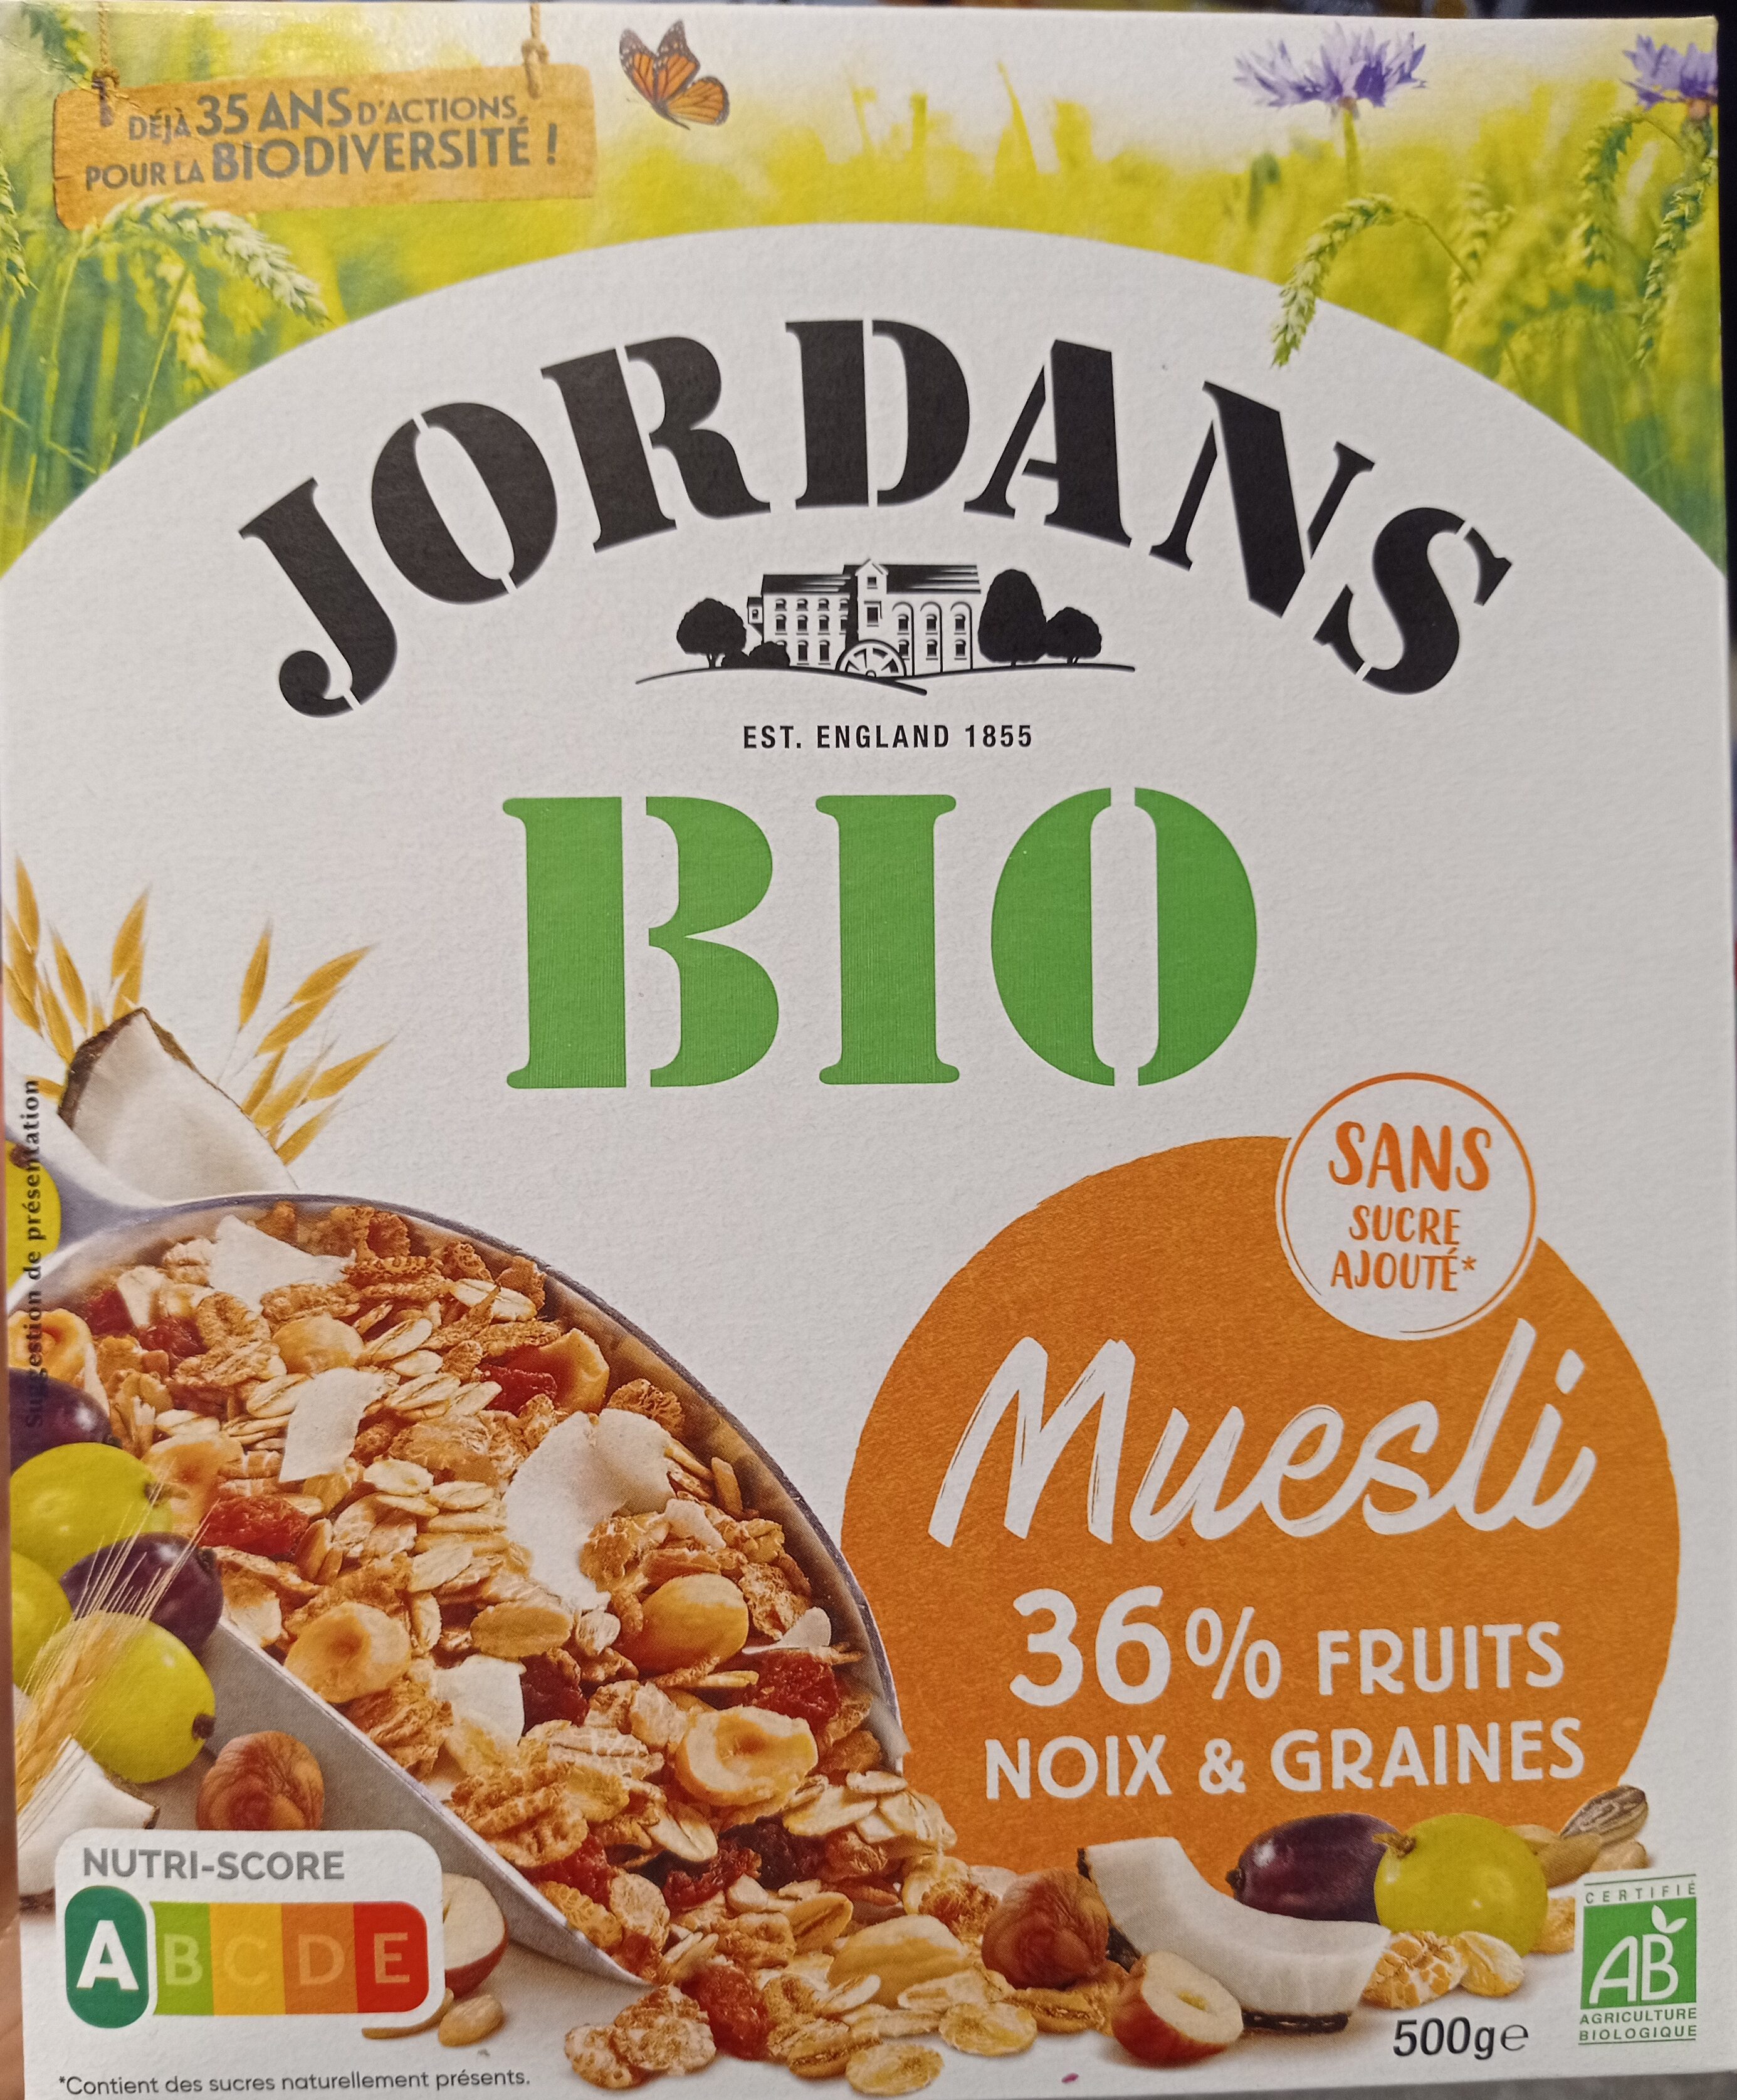 Muesli bio 36% fruits, noix & graines - Produkt - fr